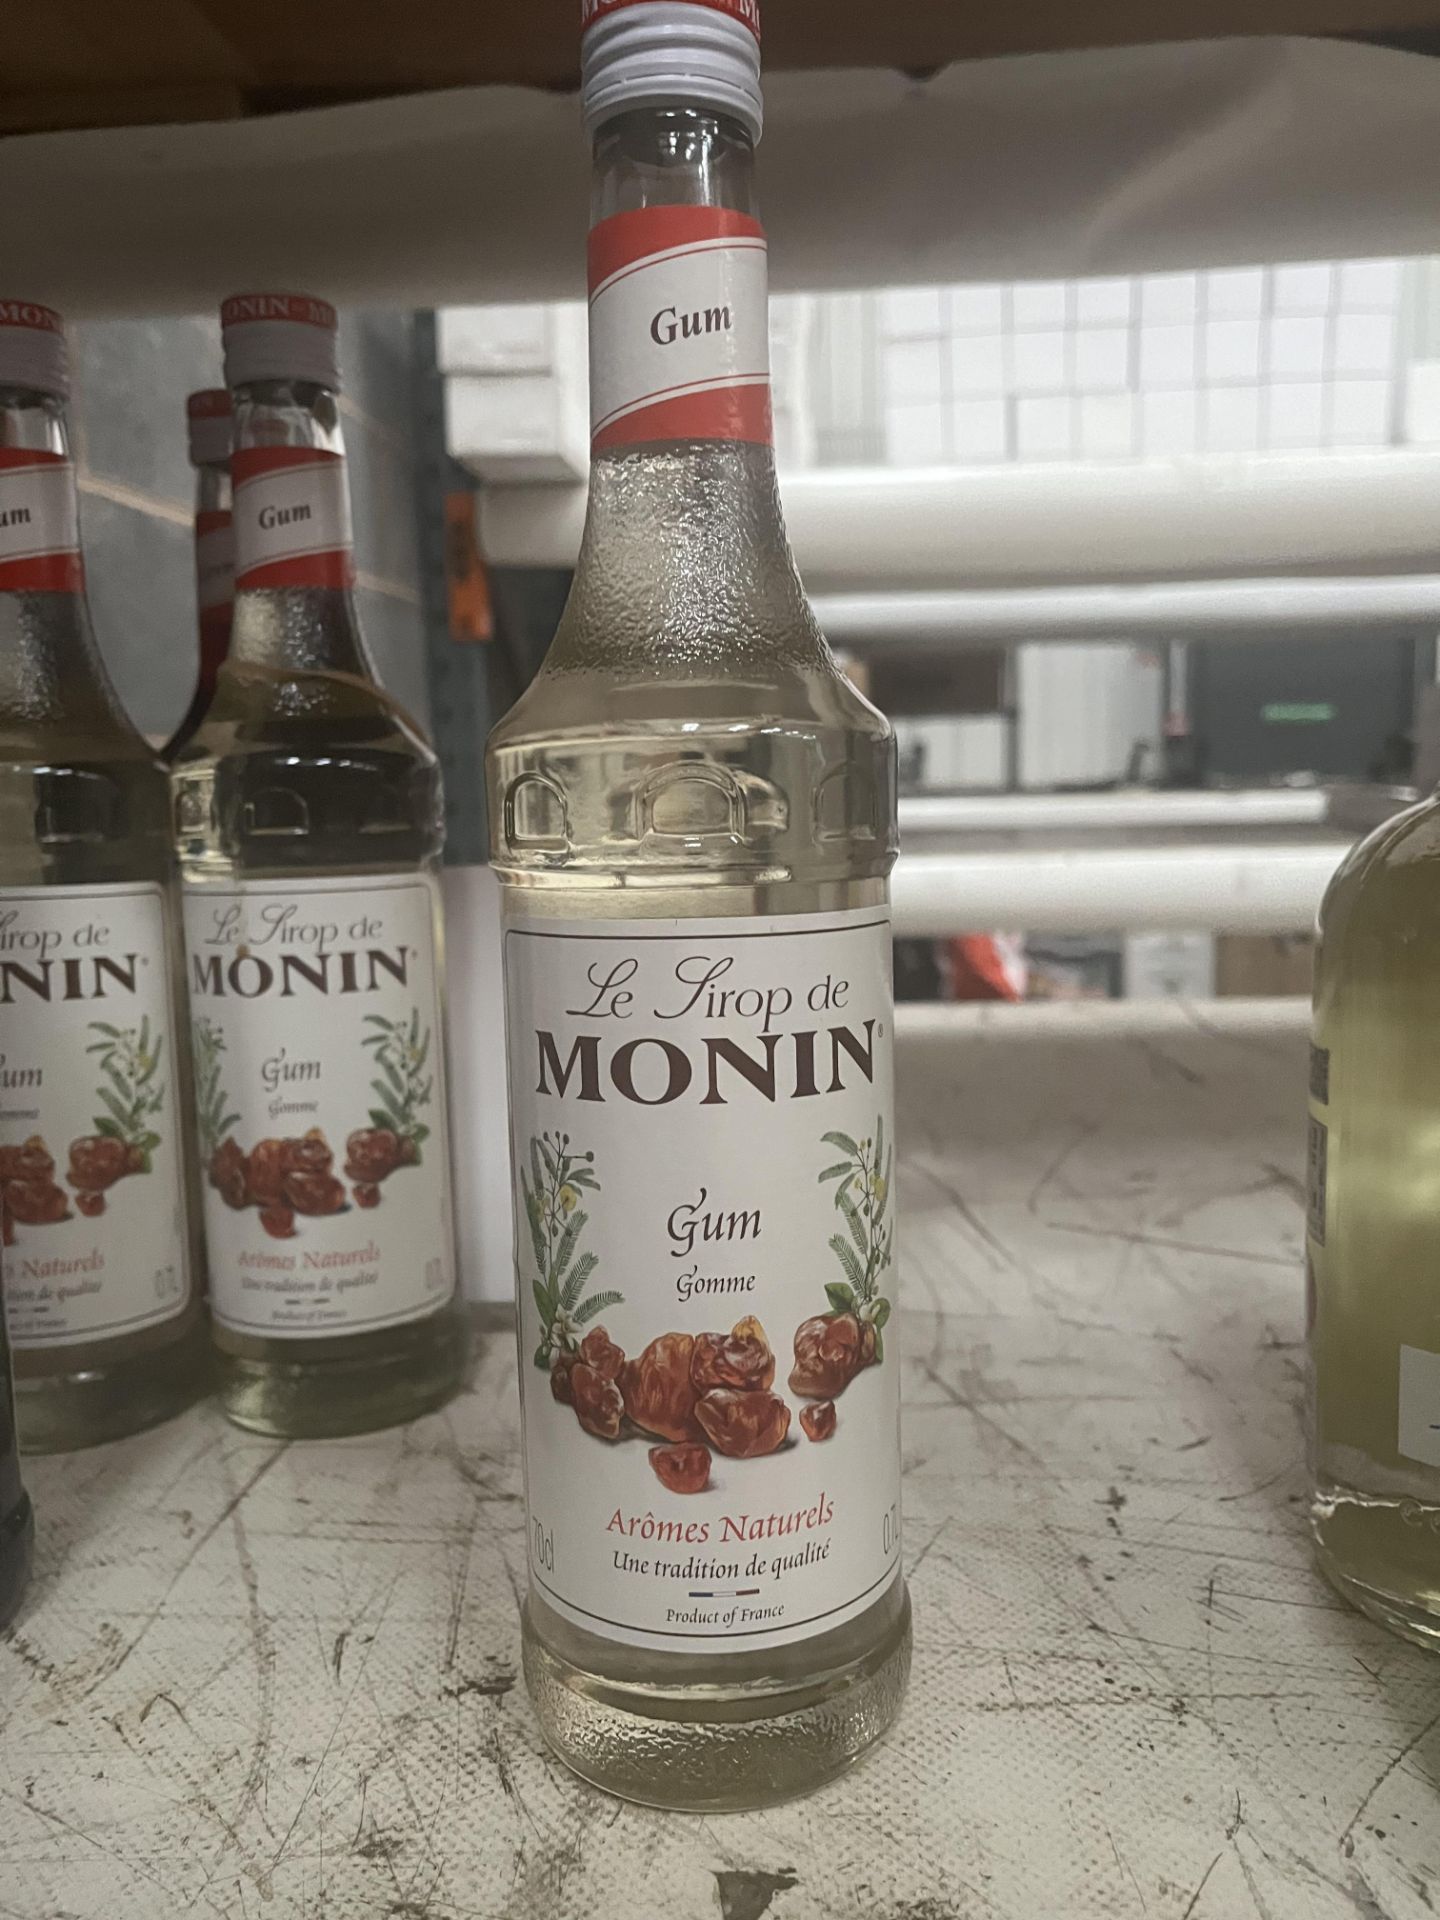 14 x Bottles of Le Sirop de Monin - 9 x 'Gum' and 5 x 'Grenadine' 70cl - Image 5 of 7